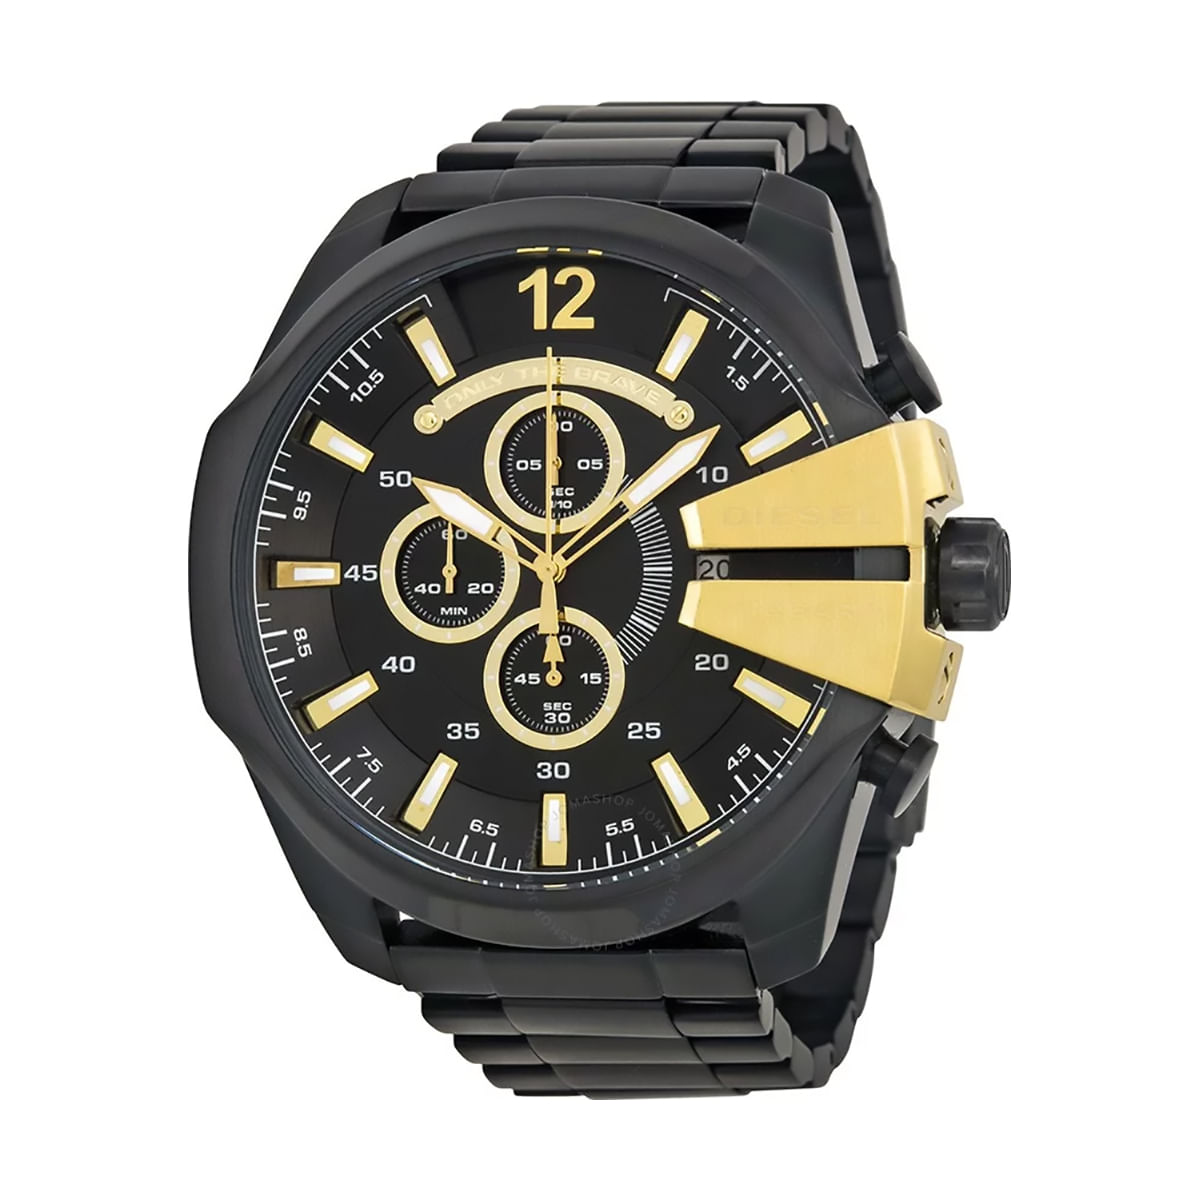 Reloj Diesel Dz4338 Gold and Black Genuino para Caballero